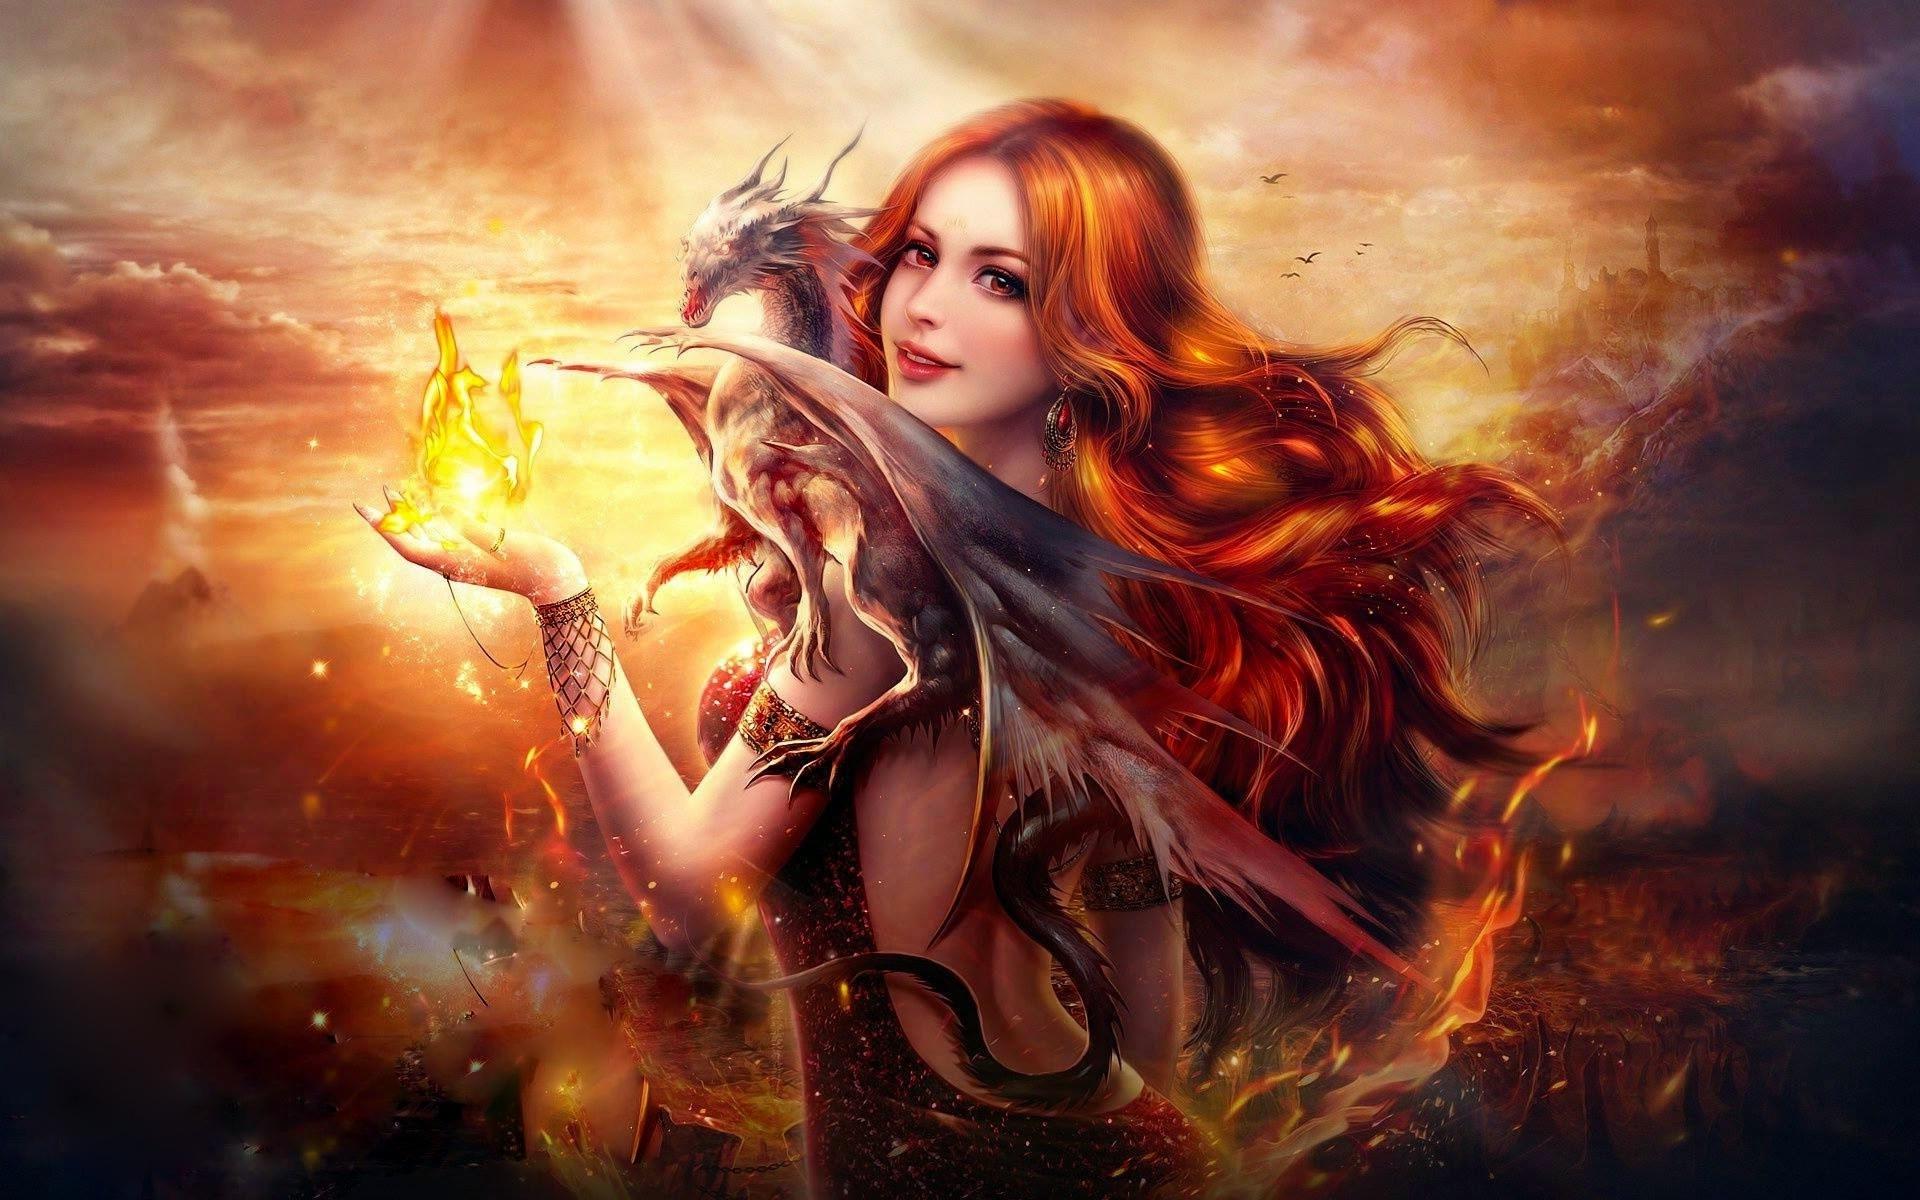 Dragon Fire Fantasy Girl Wallpaper in jpg format for free